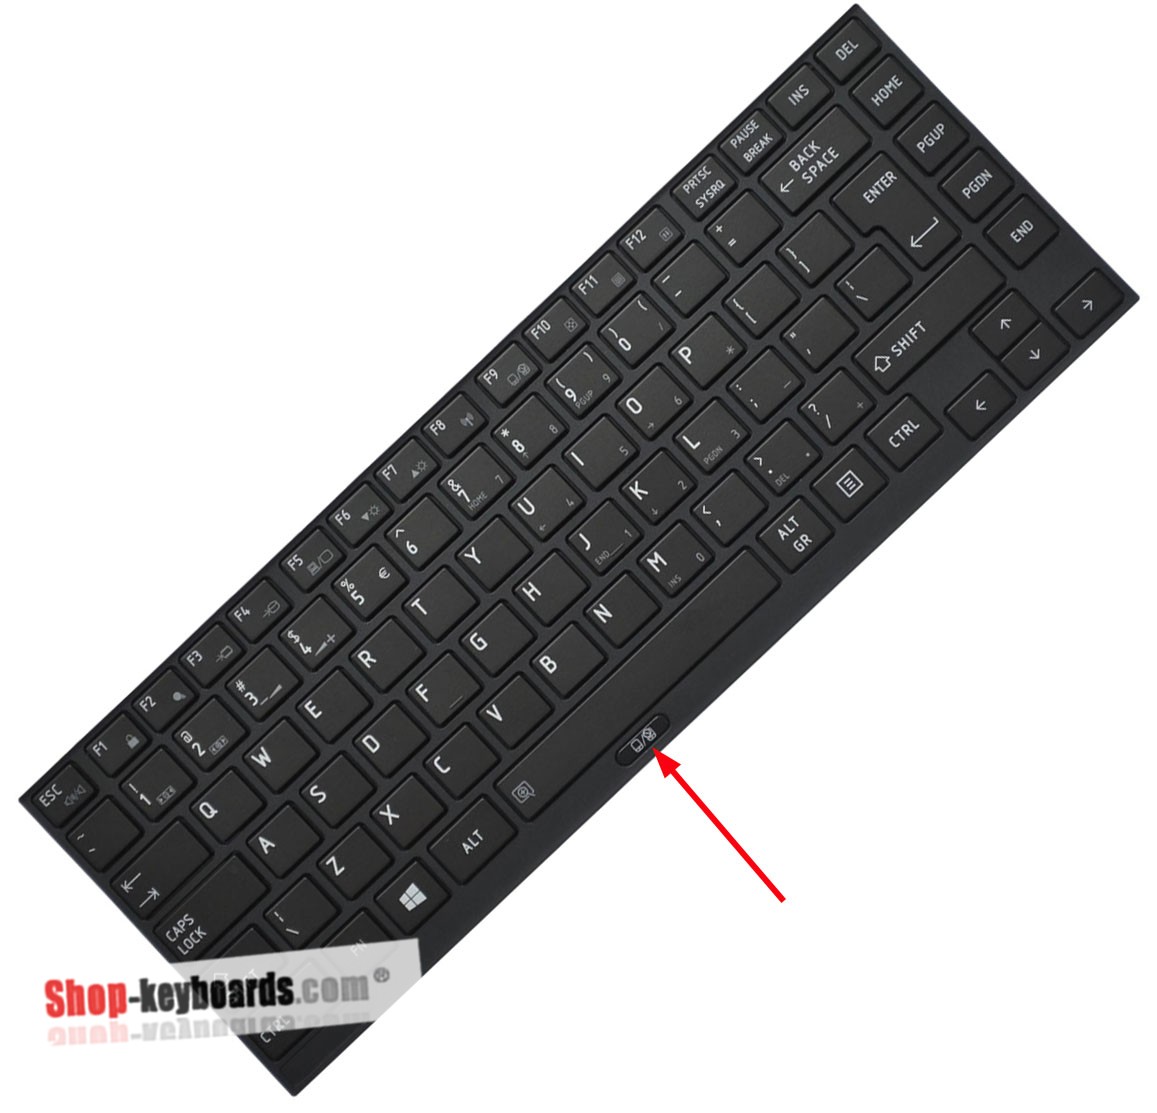 Toshiba Portege R700-S1310  Keyboard replacement